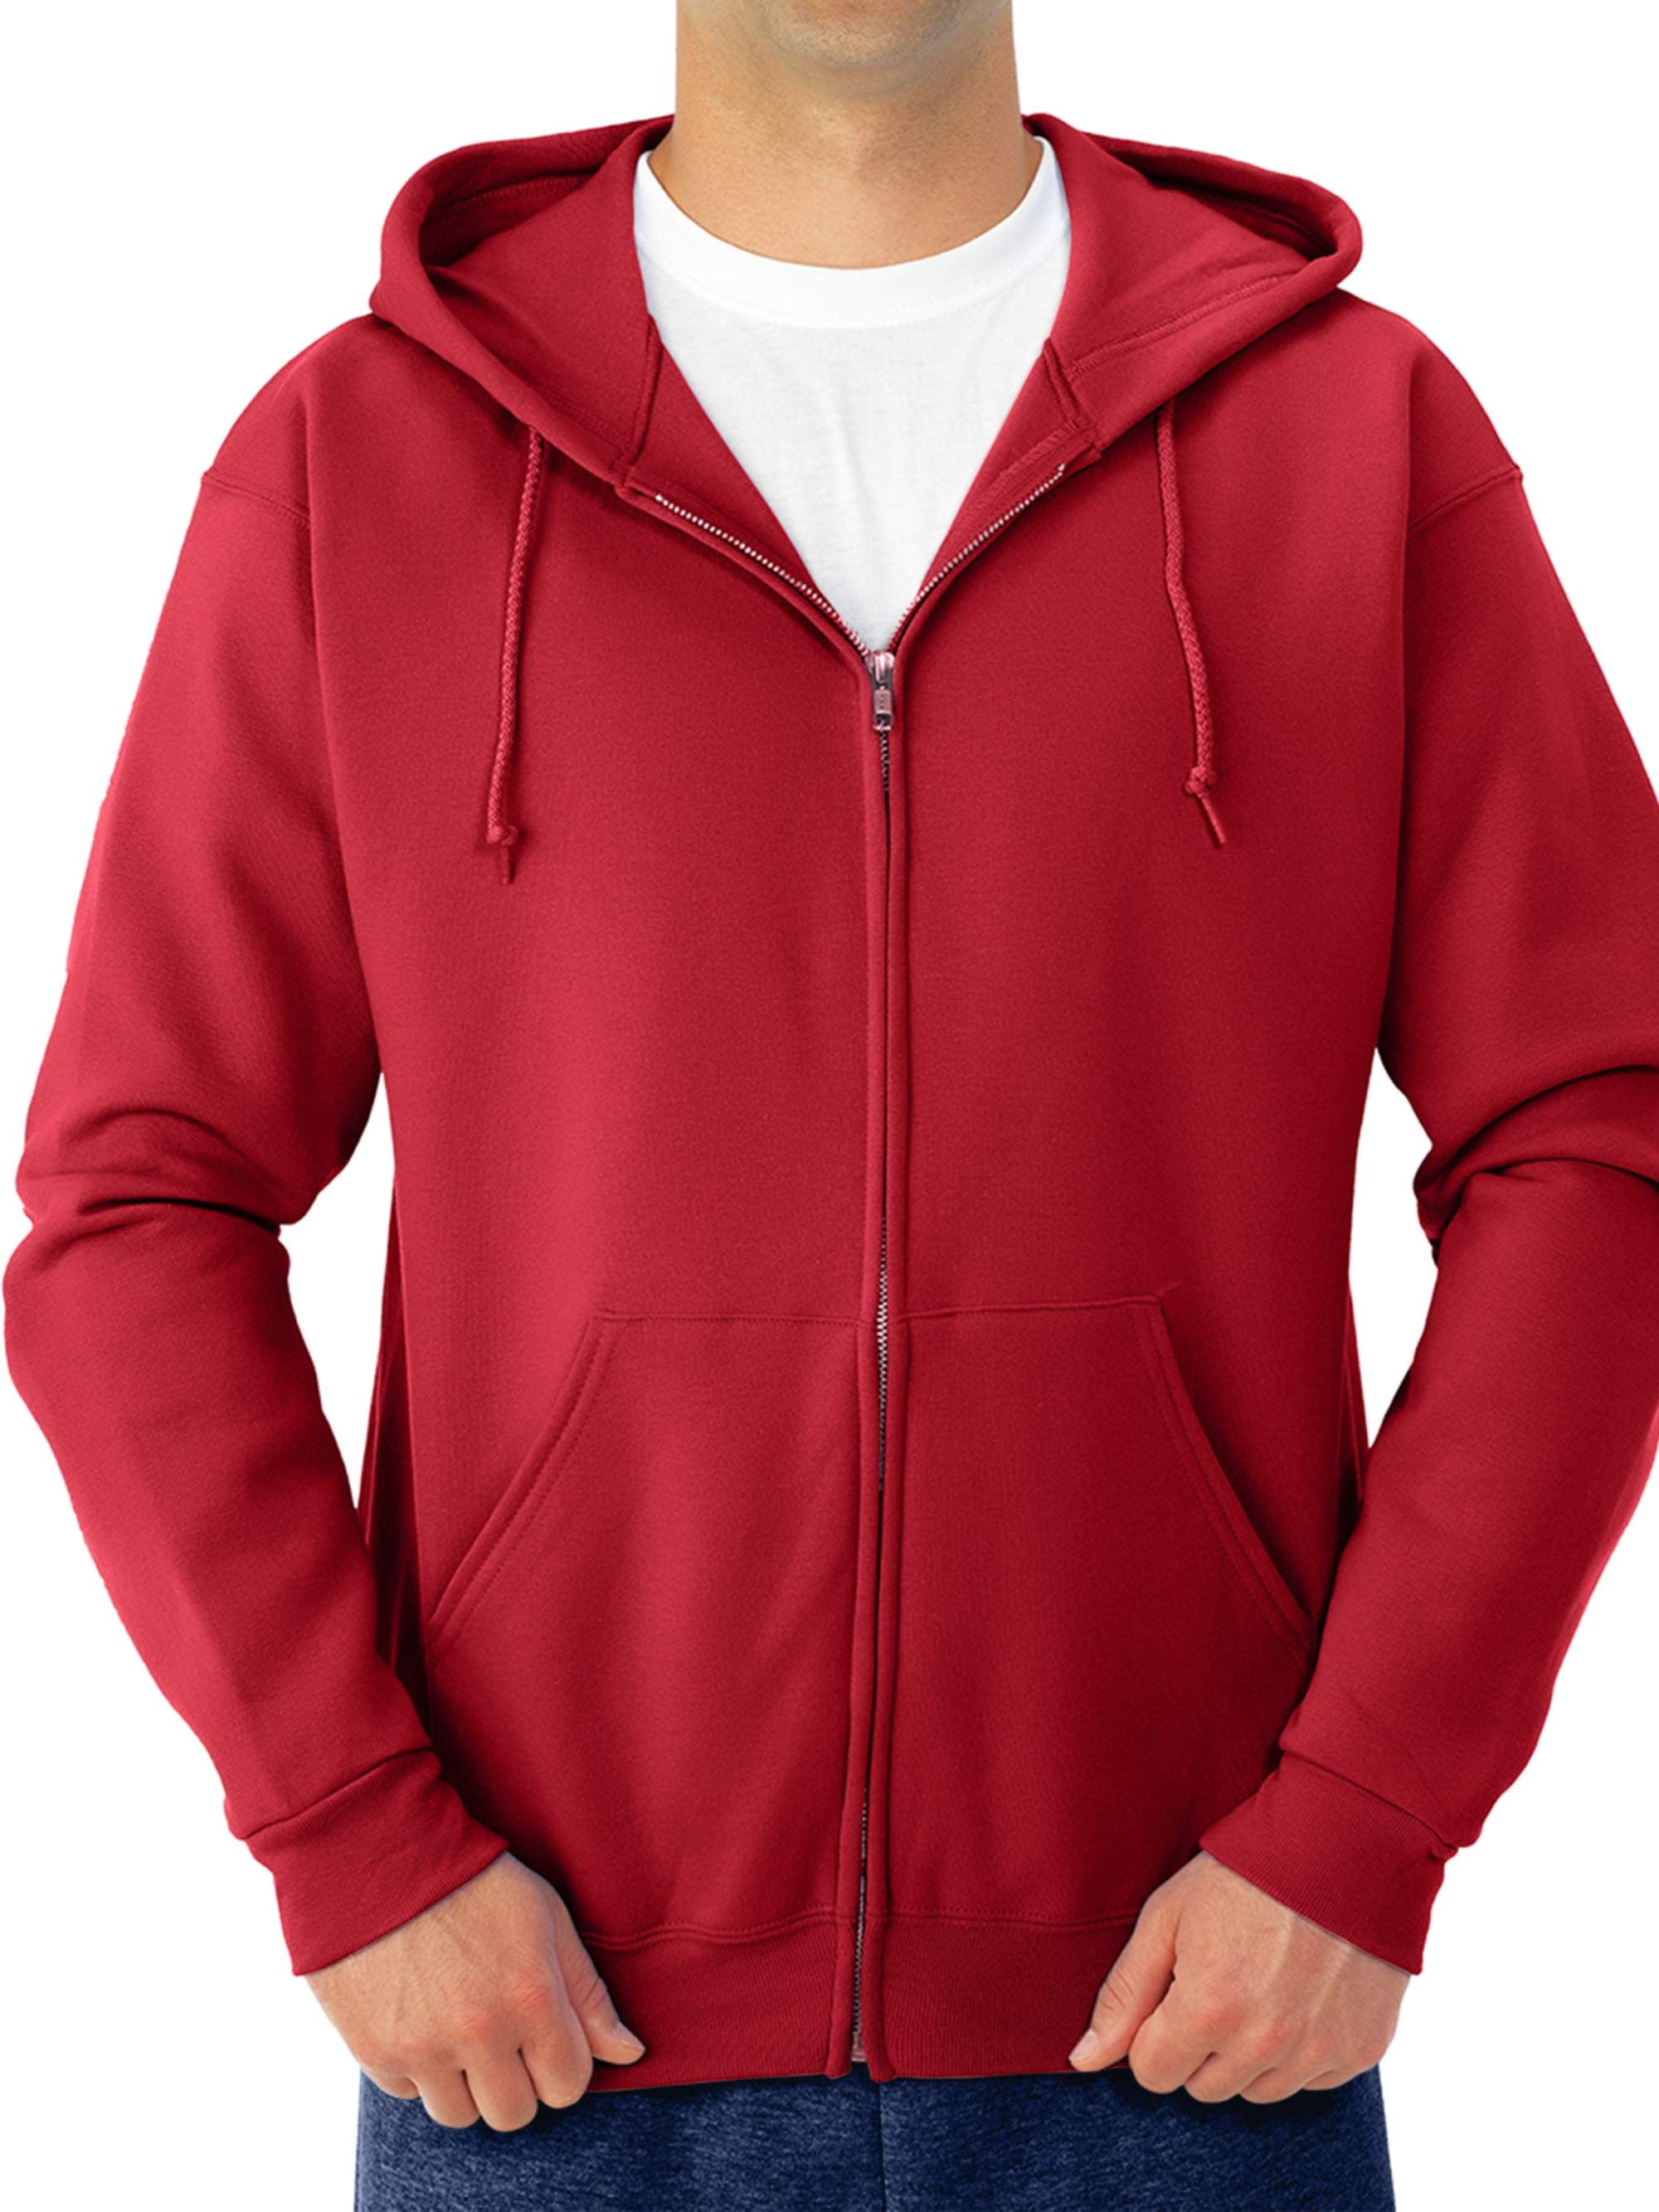 Men’s Soft Medium-Weight Fleece Full Zip Hooded Jacket - Walmart.com